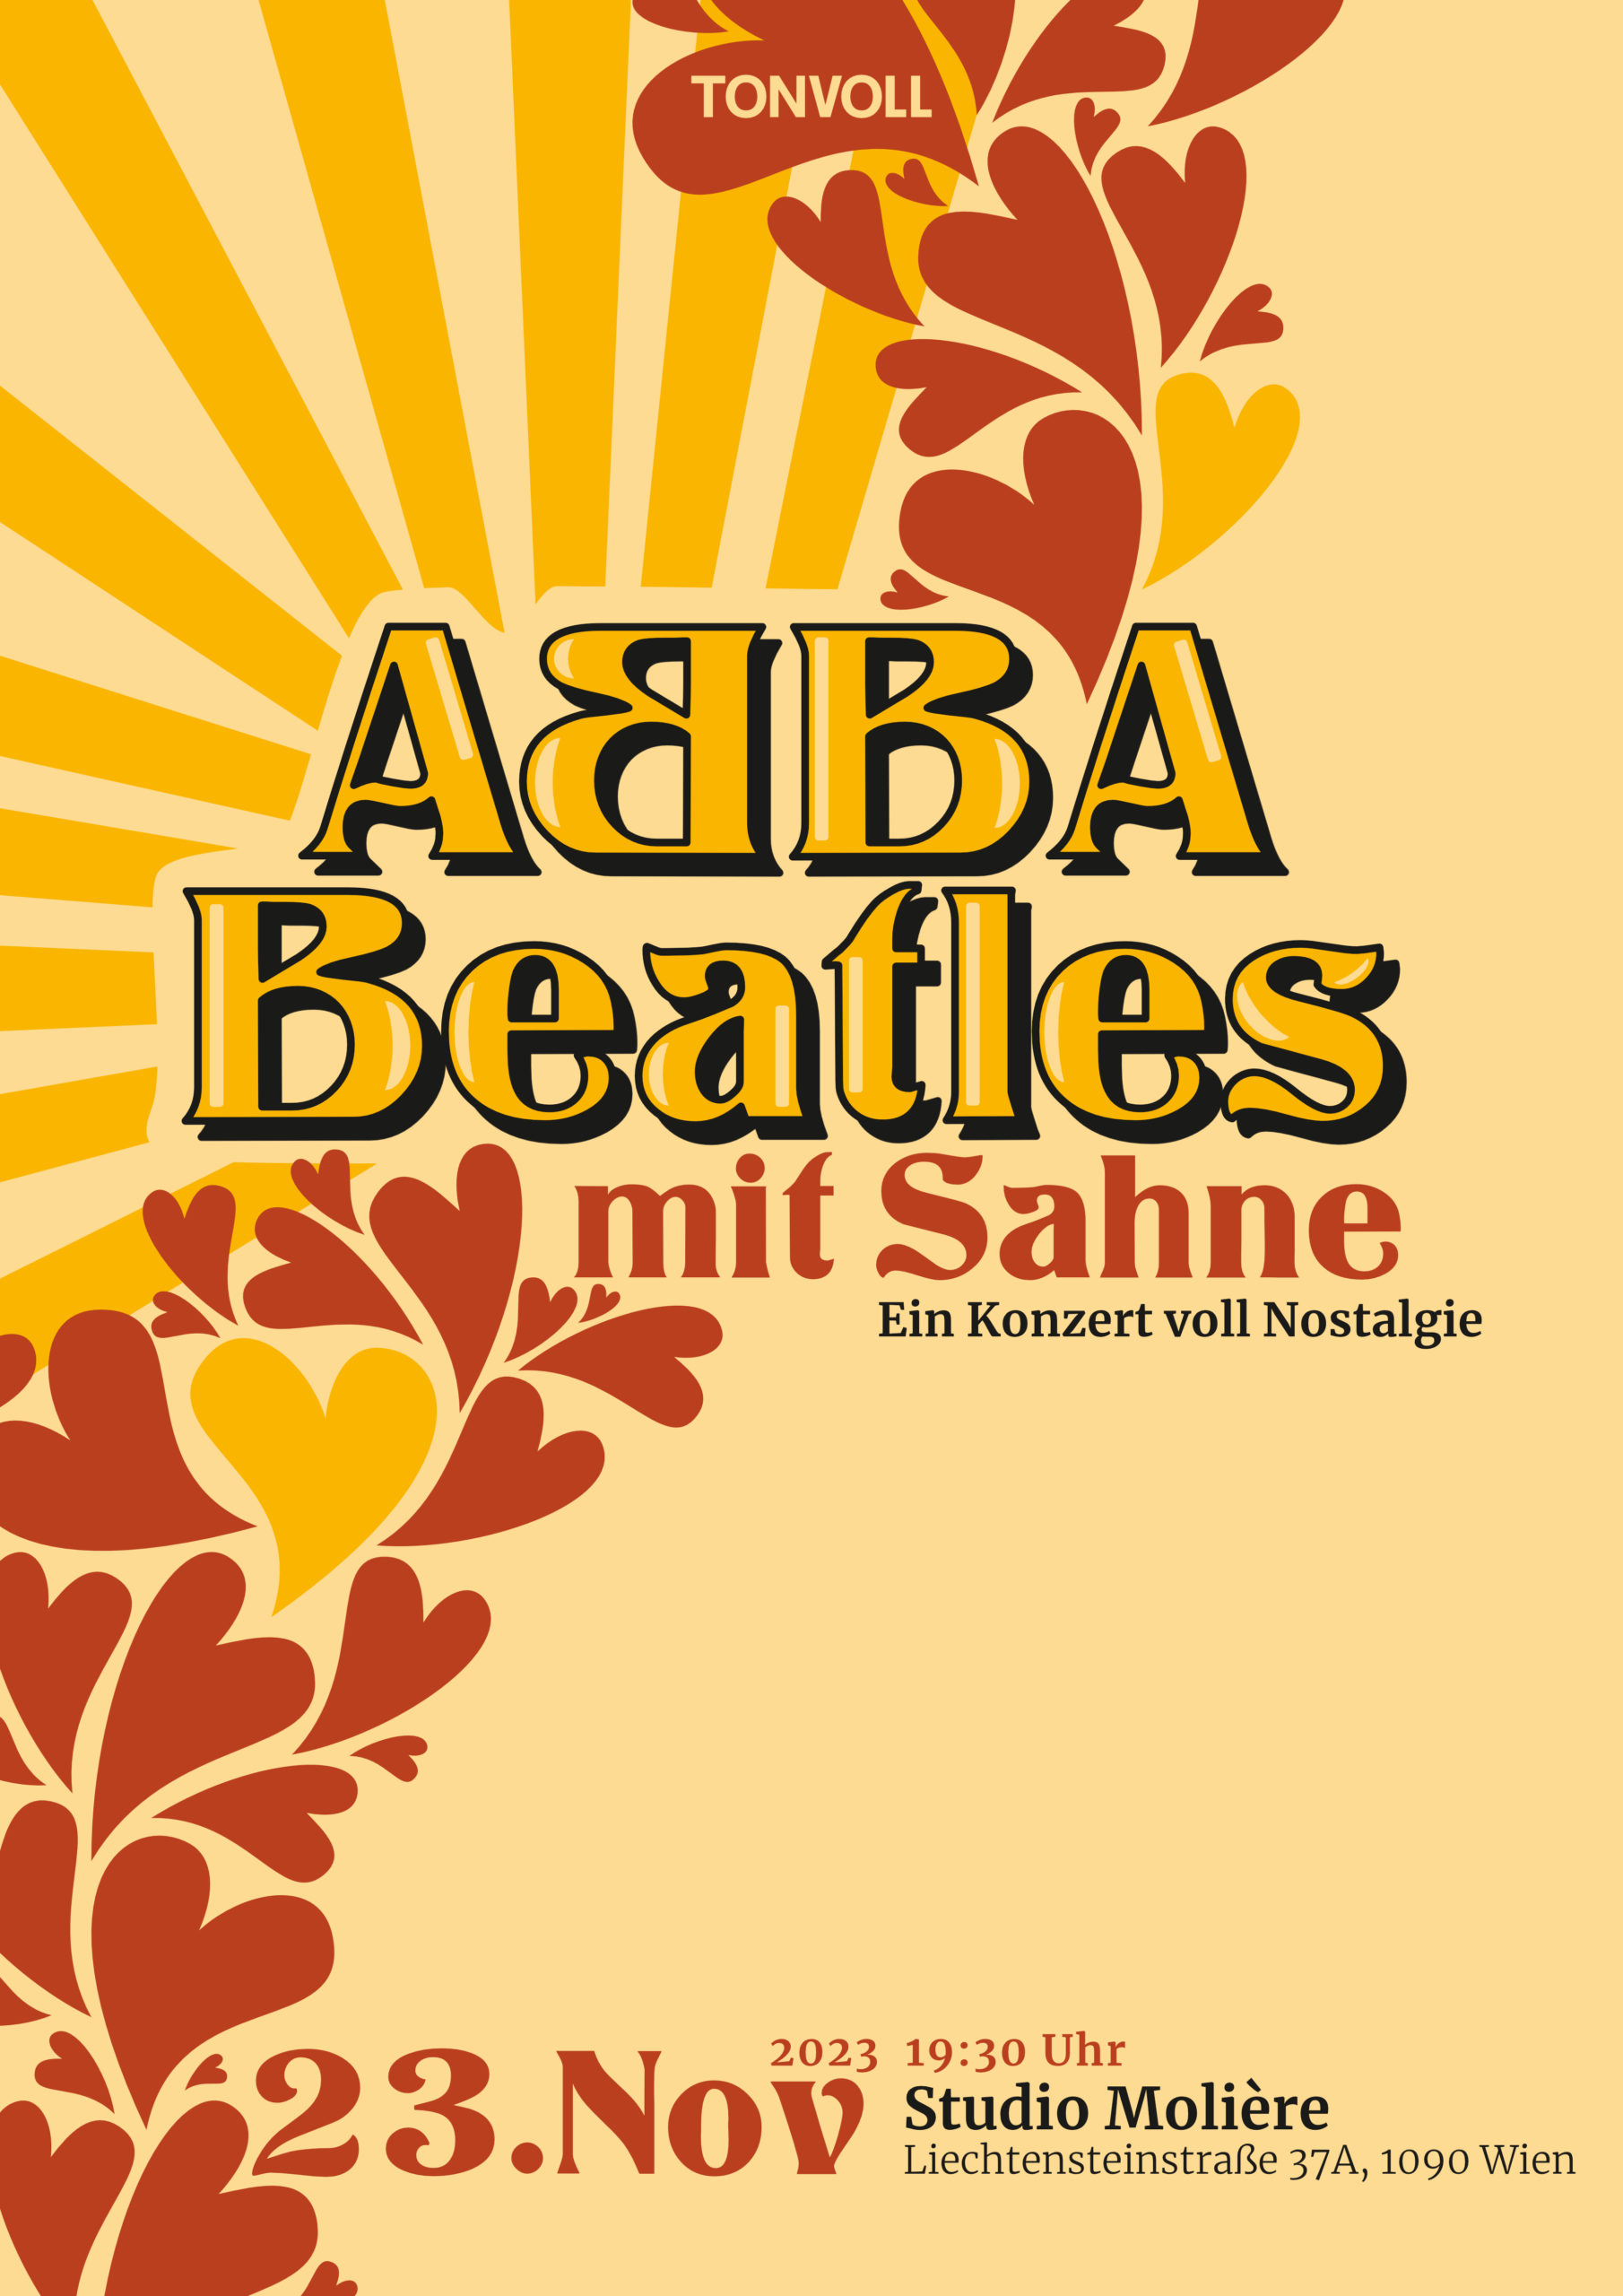 Abba Beatles mit Sahne